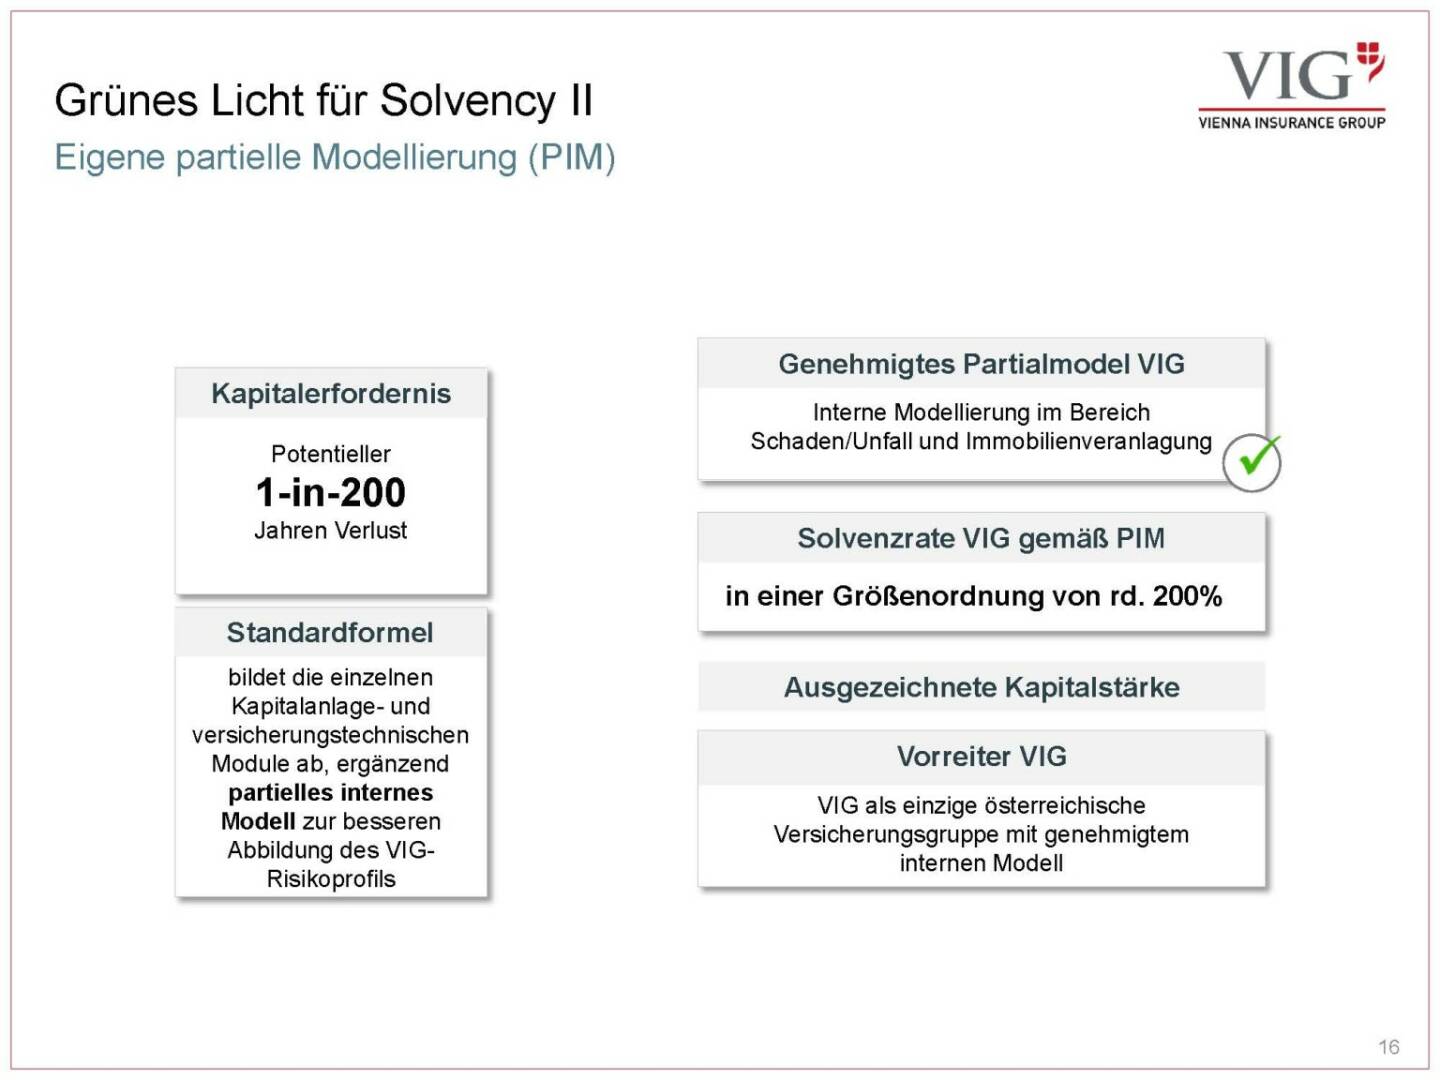 Vienna Insurance Group - Solvency II